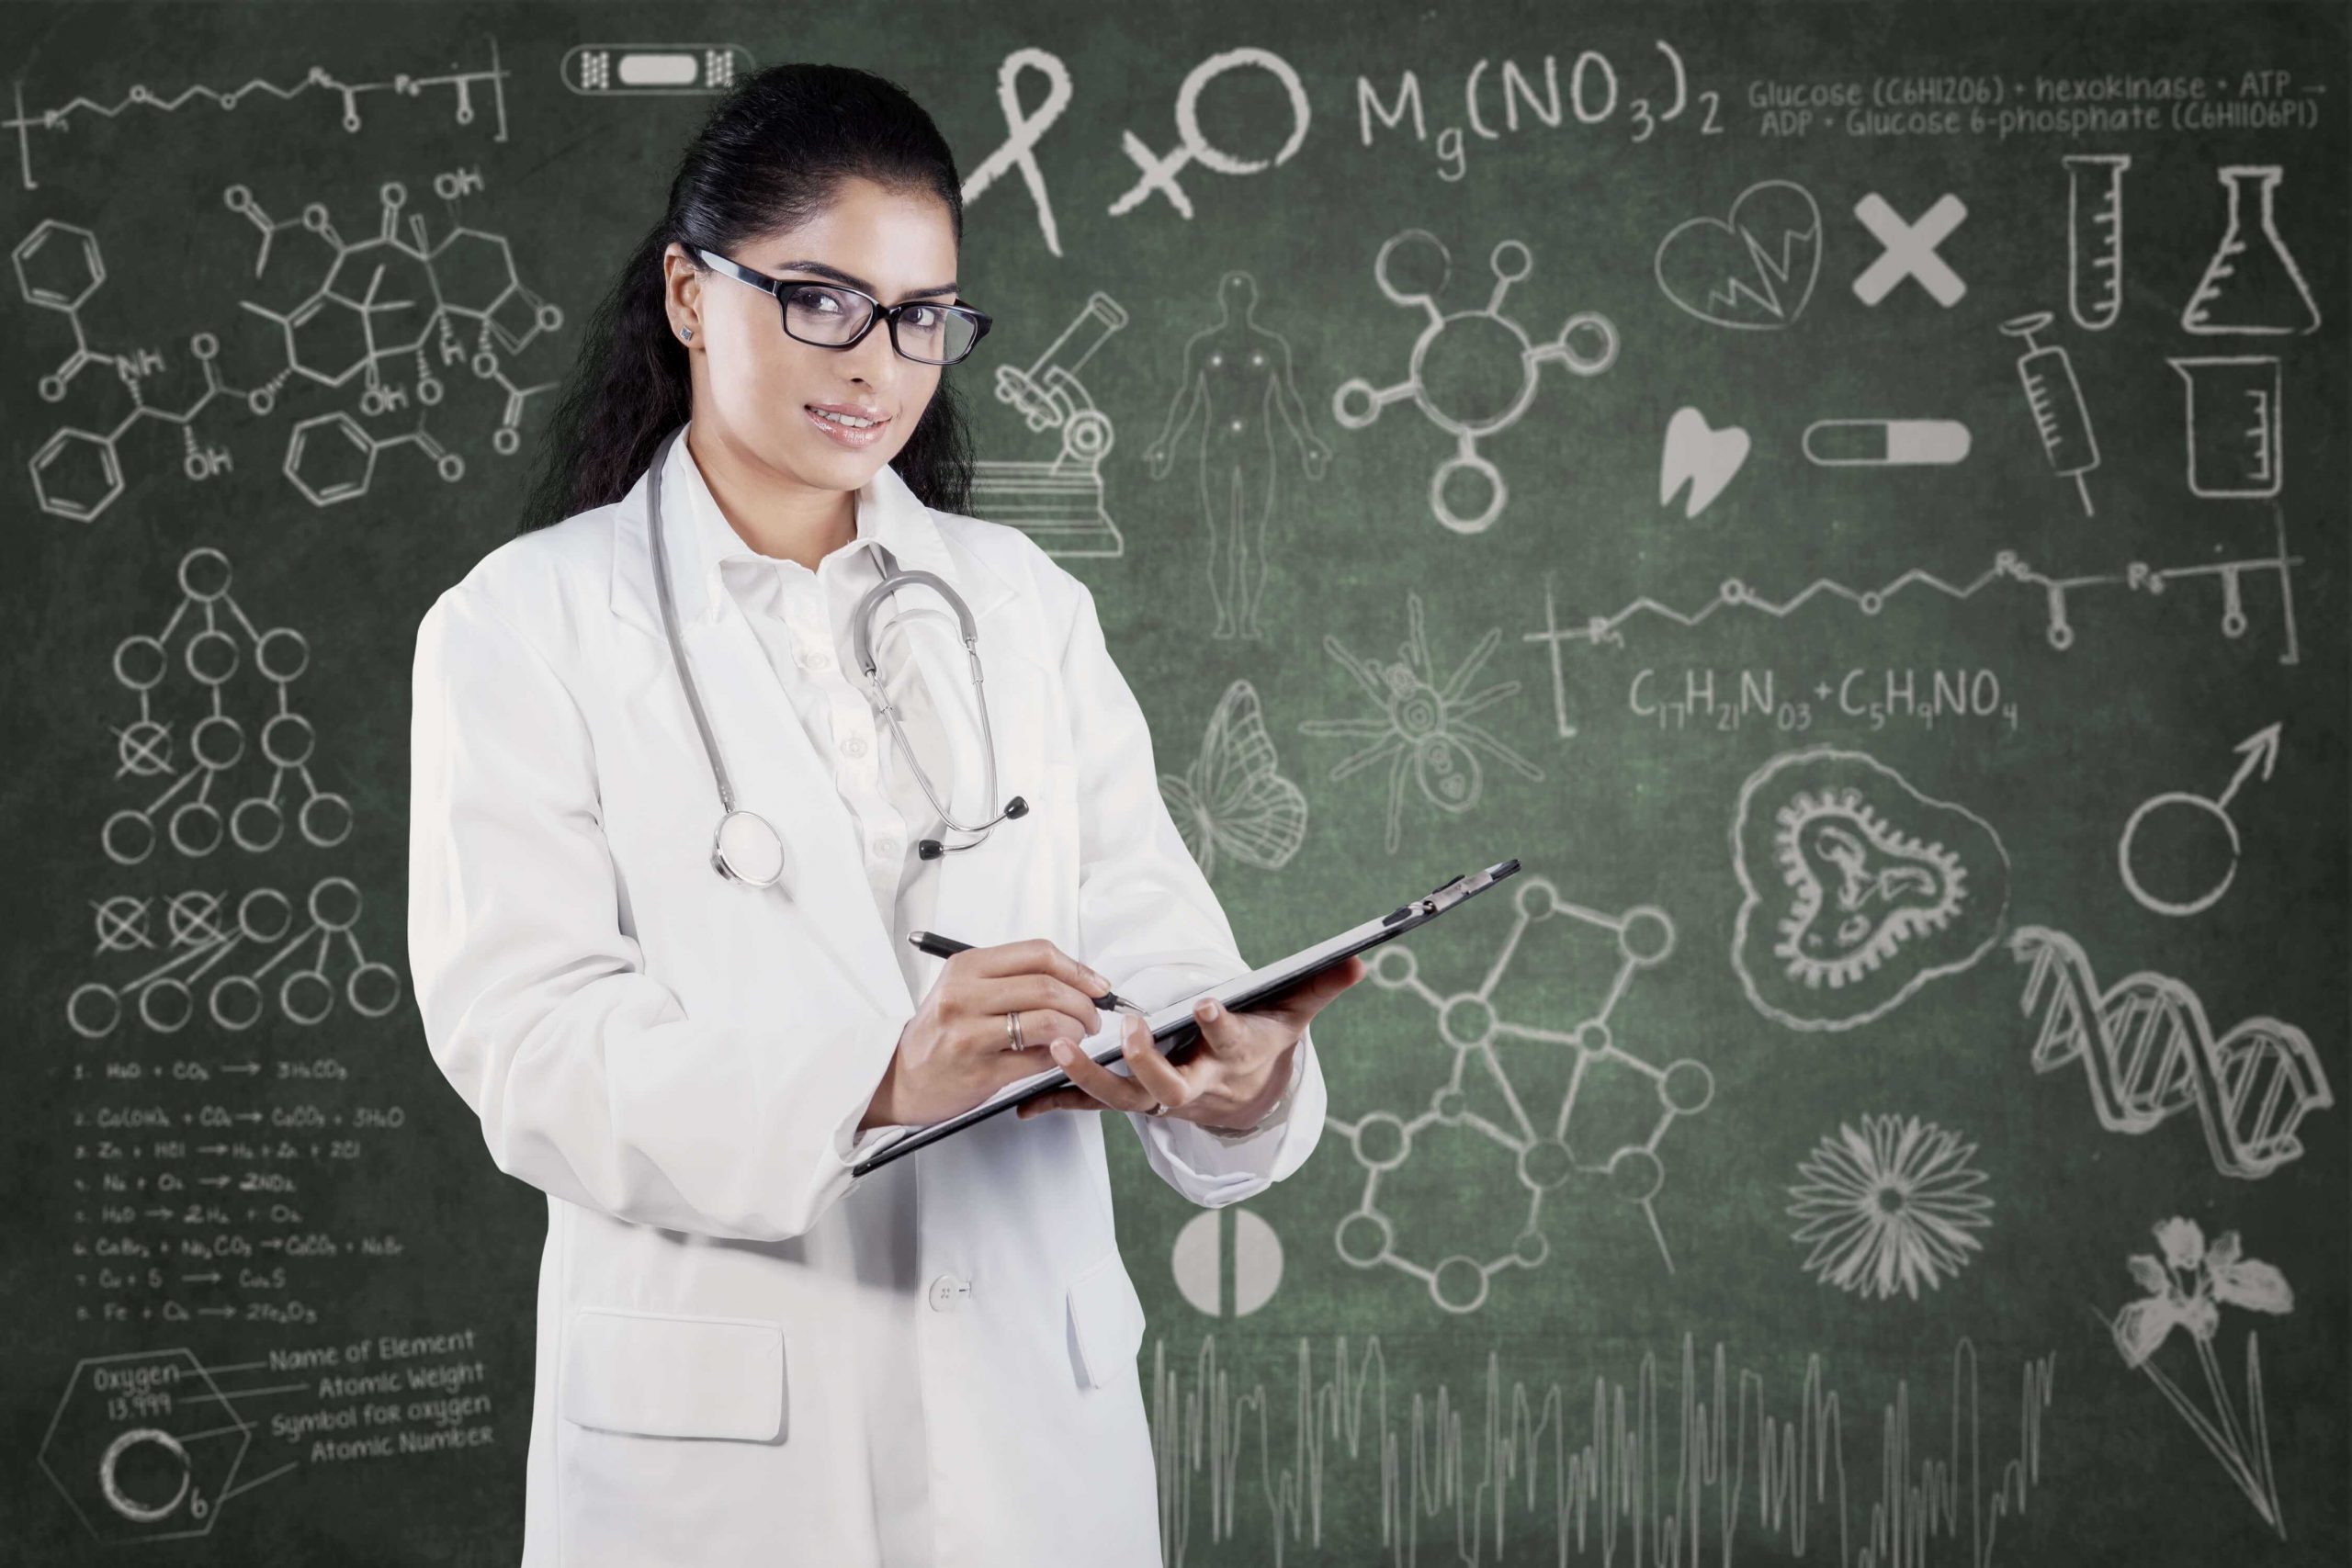 Medical Teaching Methods Get A Boost Via DocTutorials App V 2.023